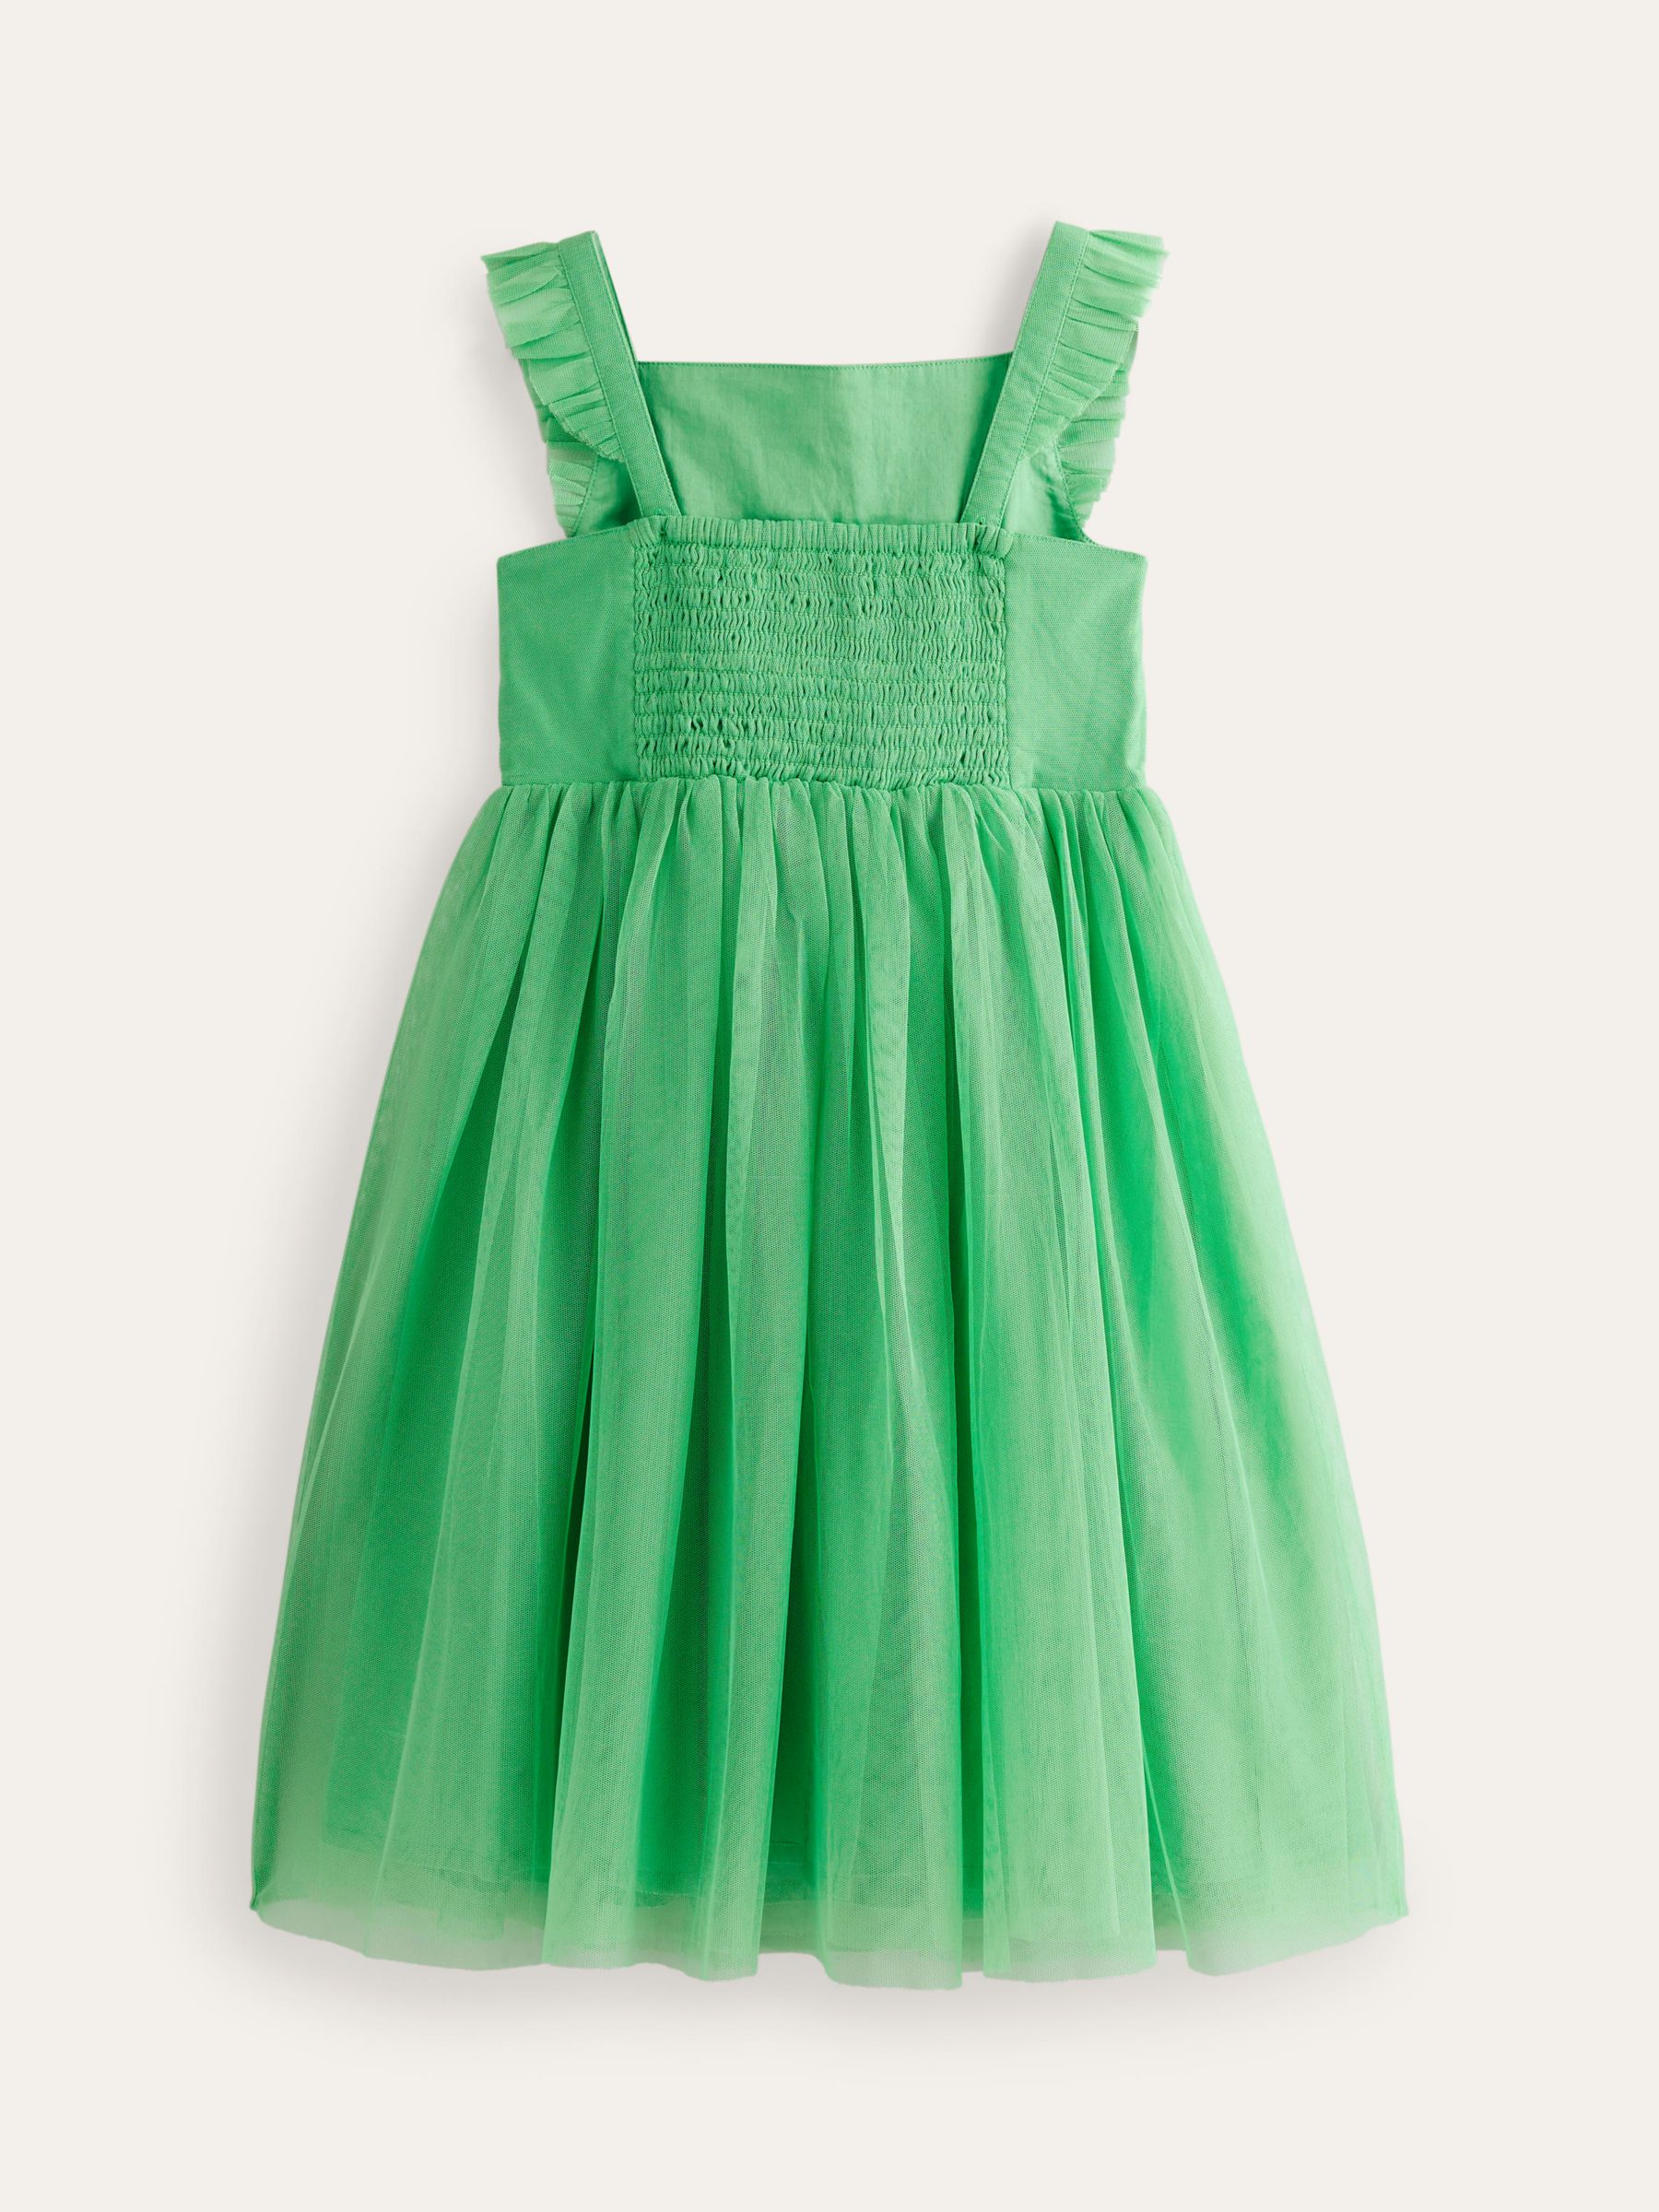 Mini Boden Kids' Applique Flowers Tulle Dress, Pea Green, 2-3 years